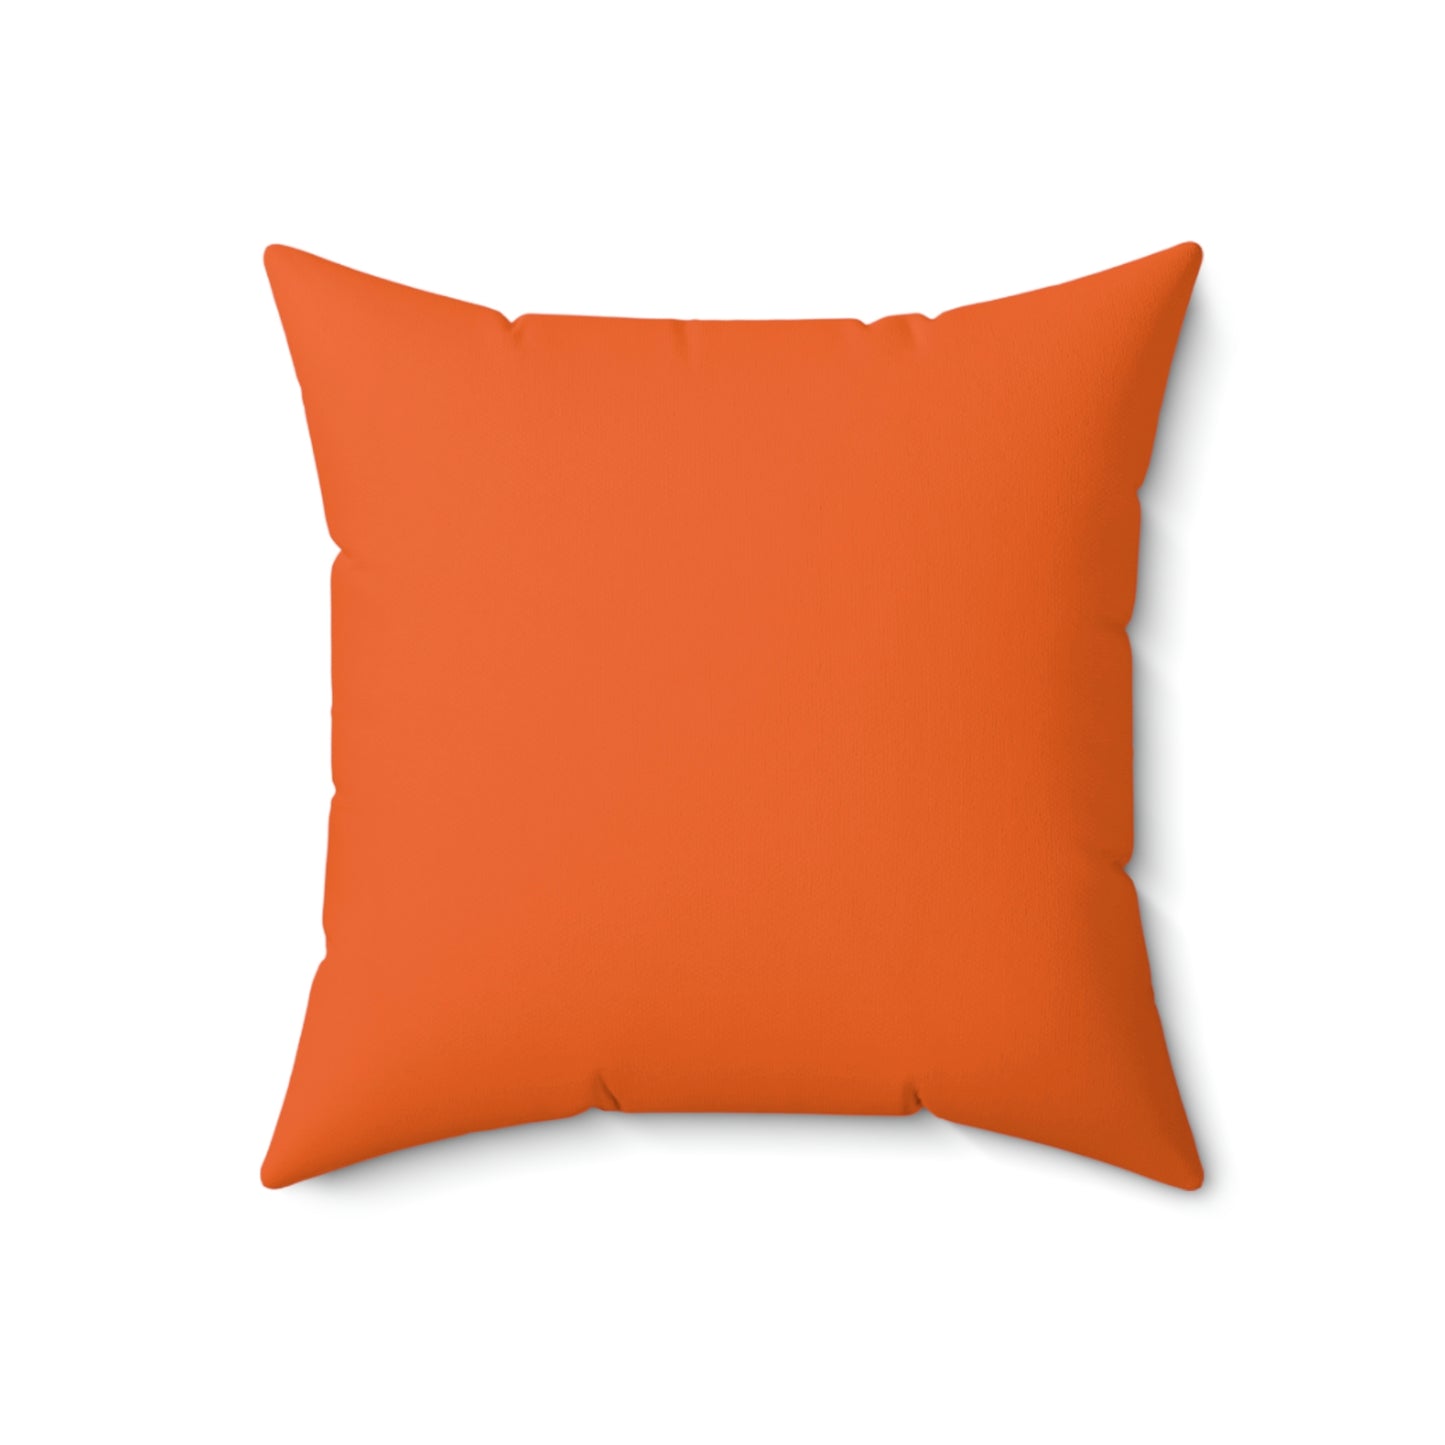 Spun Polyester Square Pillow Case “Moth Black on Orange”